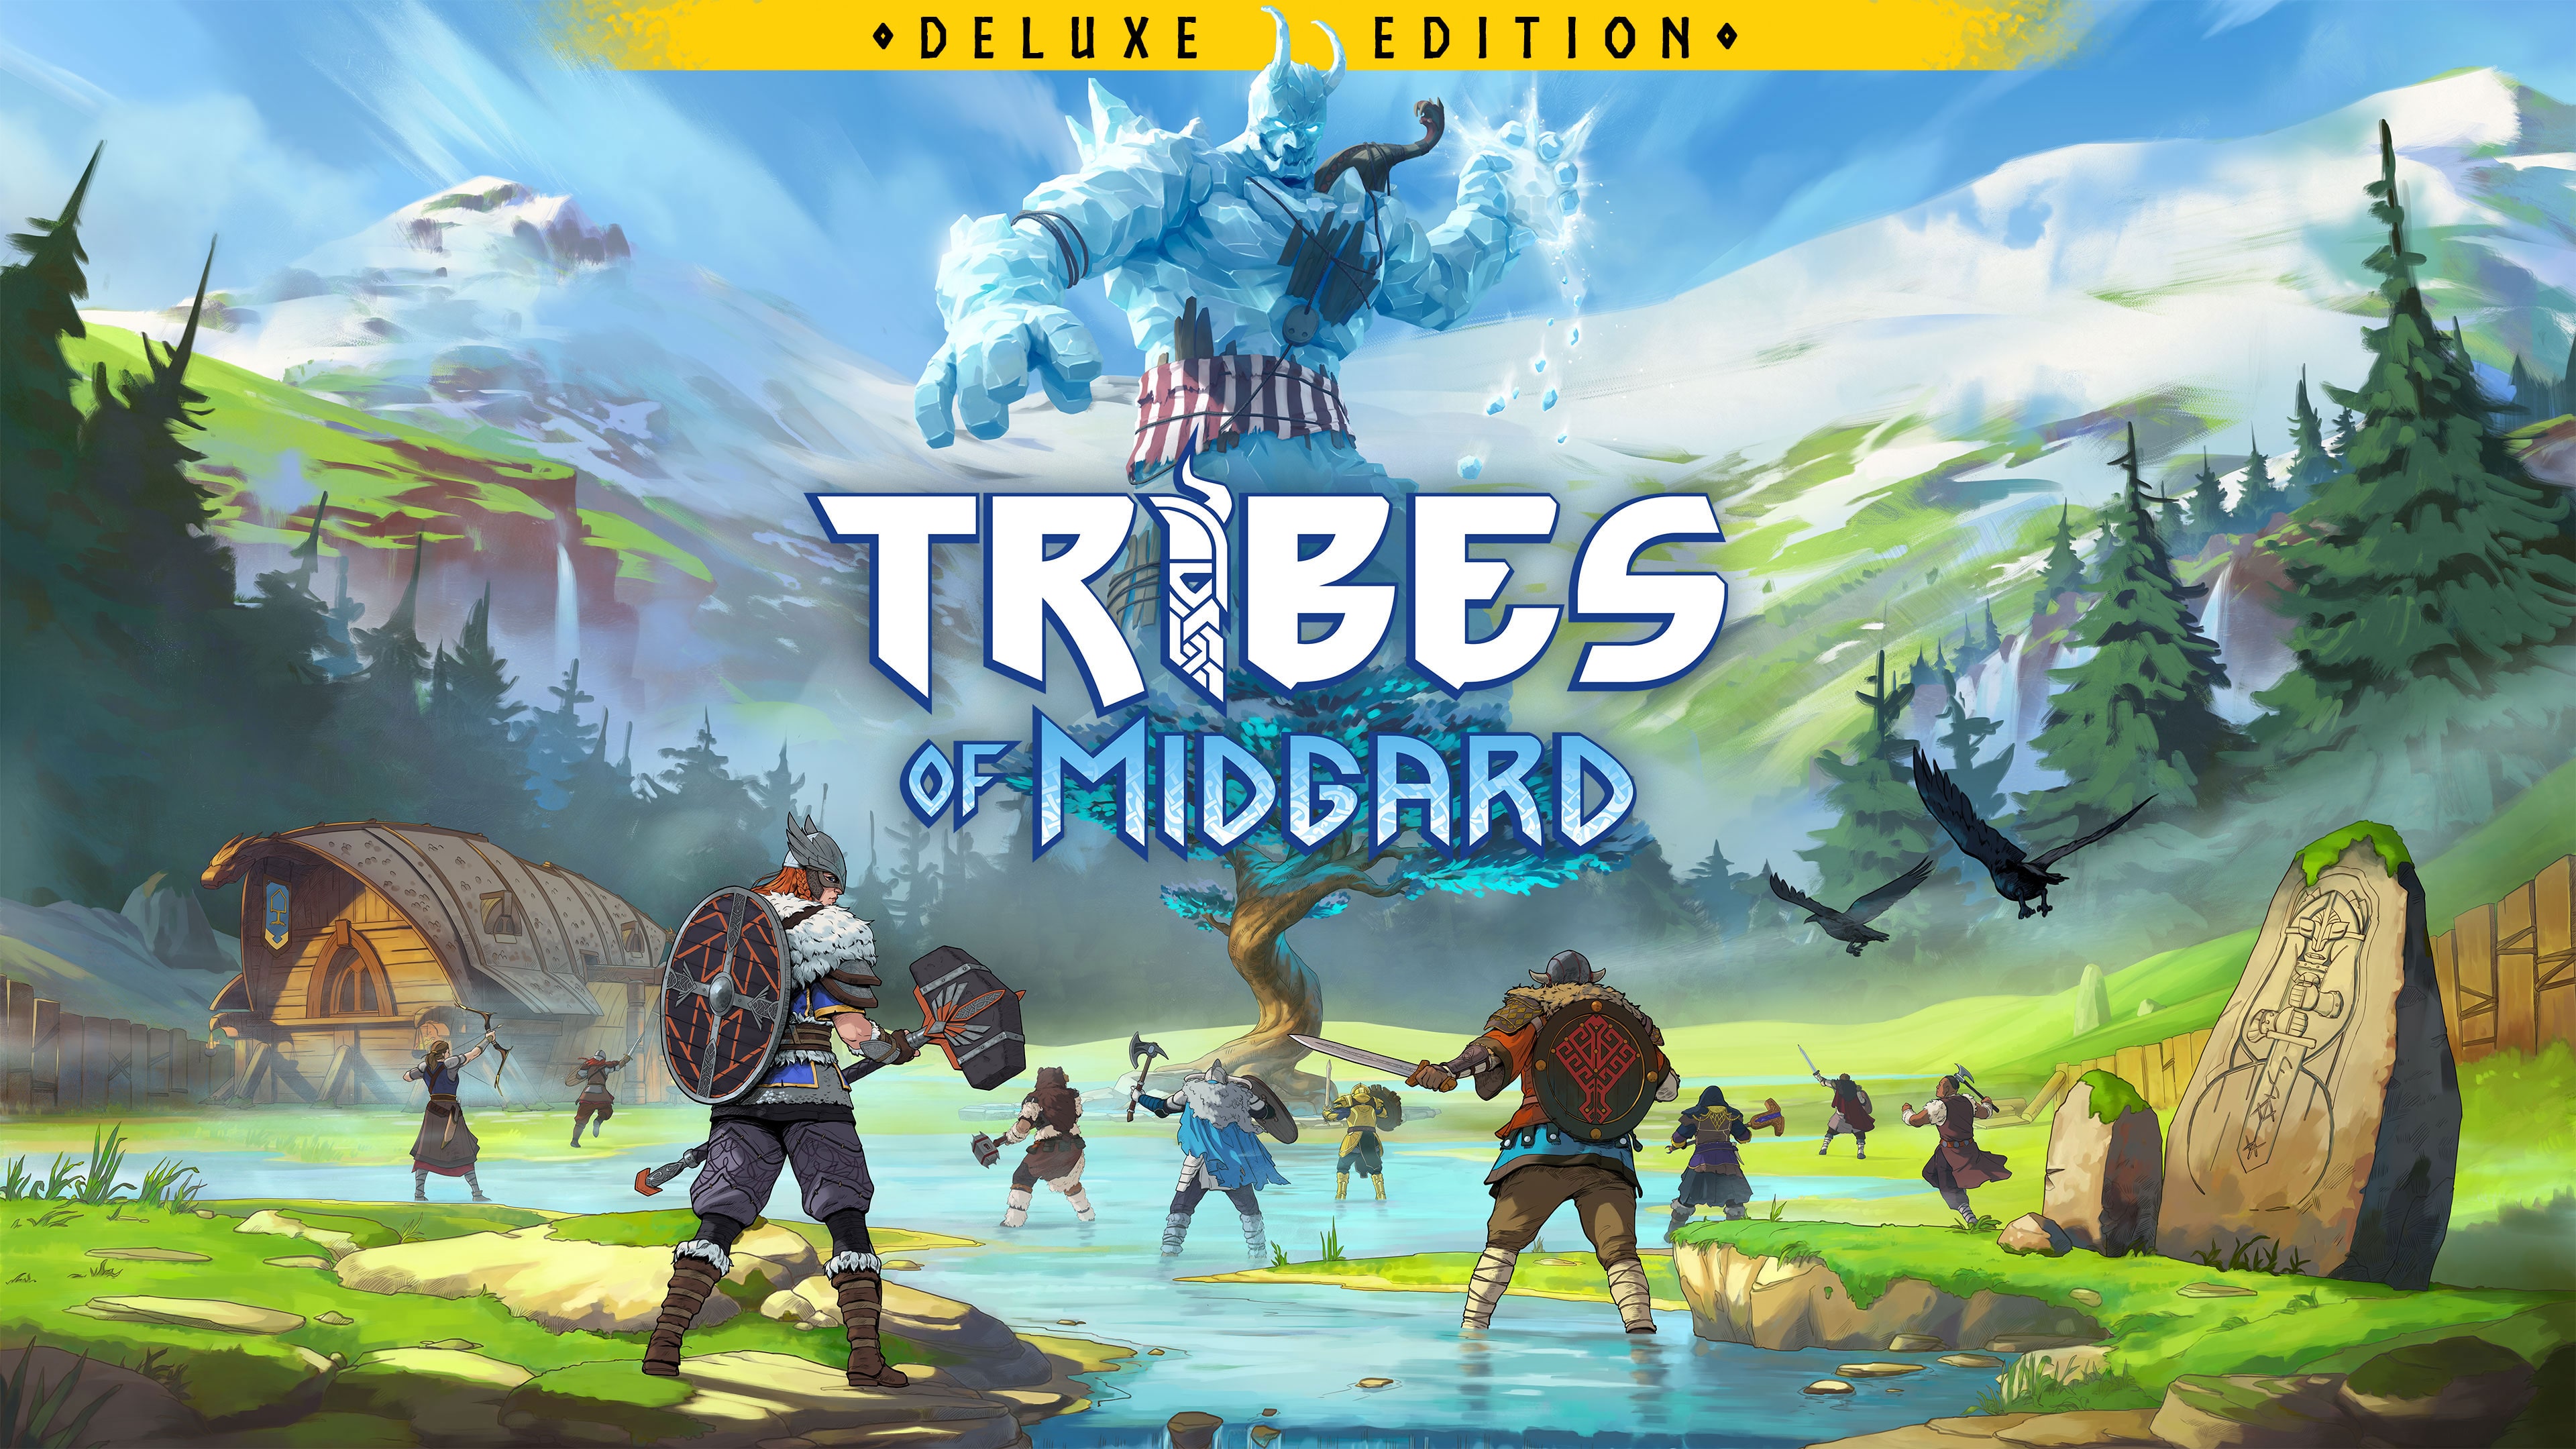 Tribes of Midgard Digital Deluxe PS4 & PS5